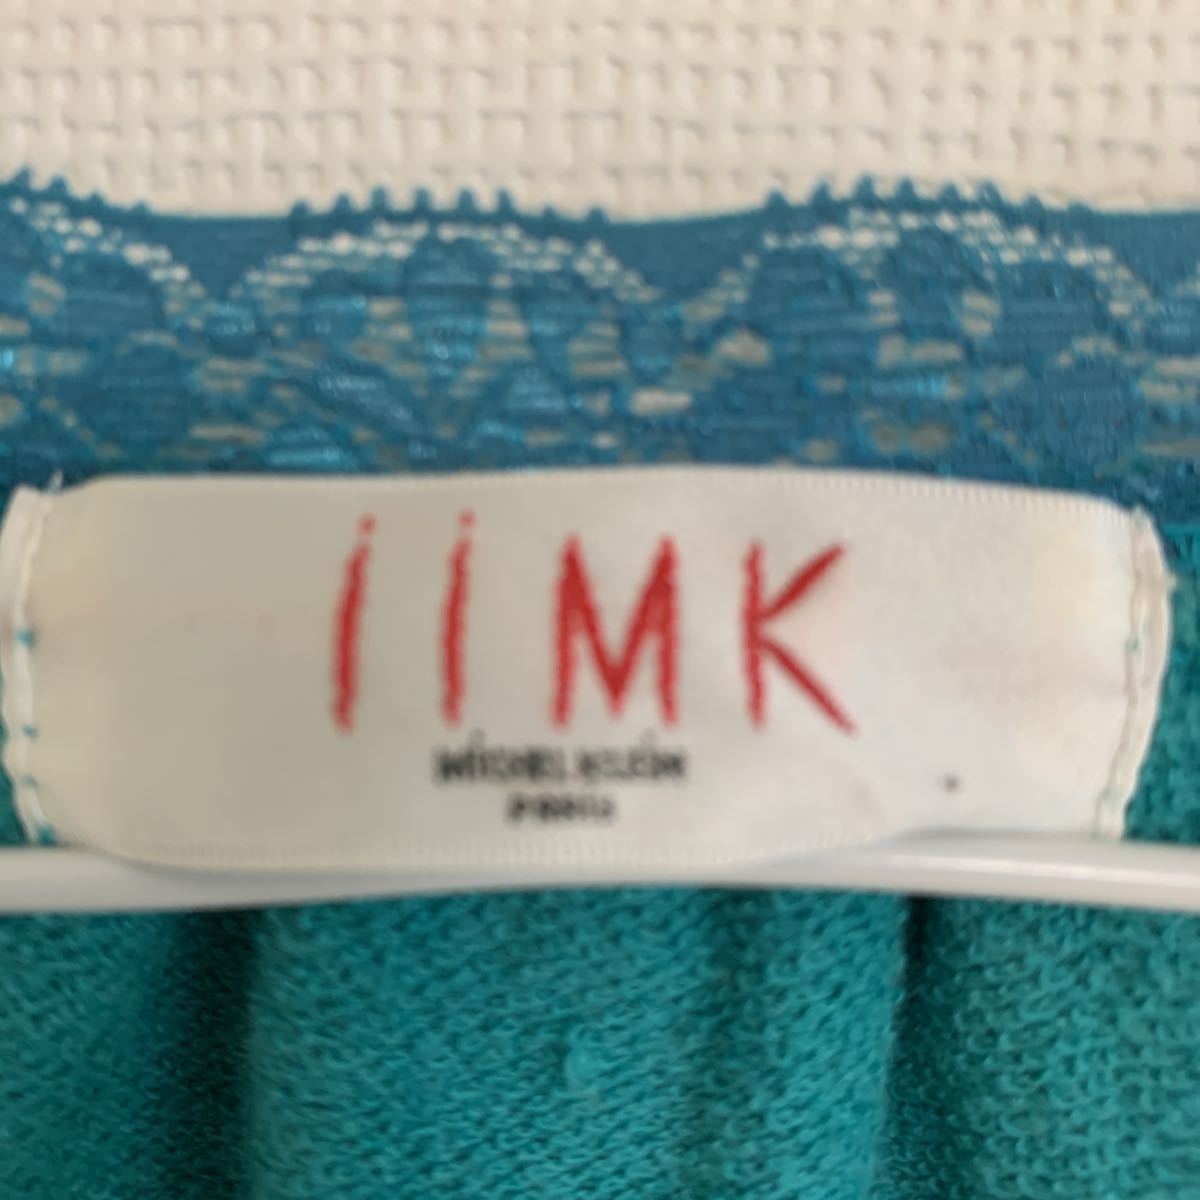 IIMK Michel Klein tops 38 size turquoise turquoise blue 